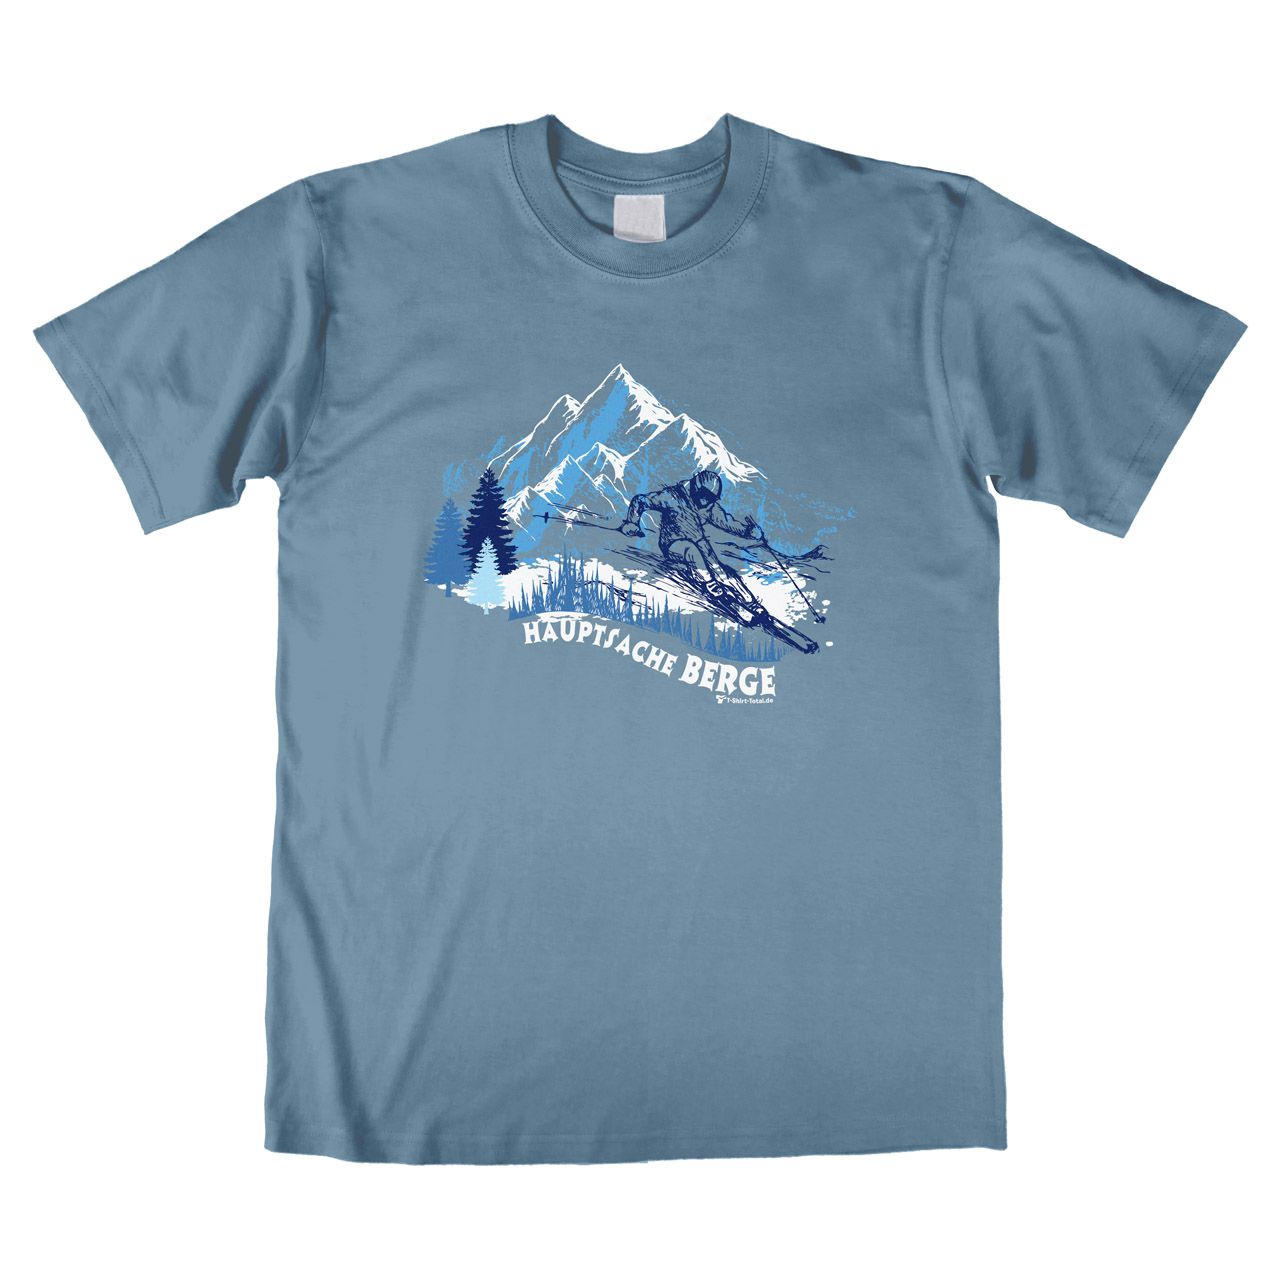 Hauptsache Berge Unisex T-Shirt denim Medium